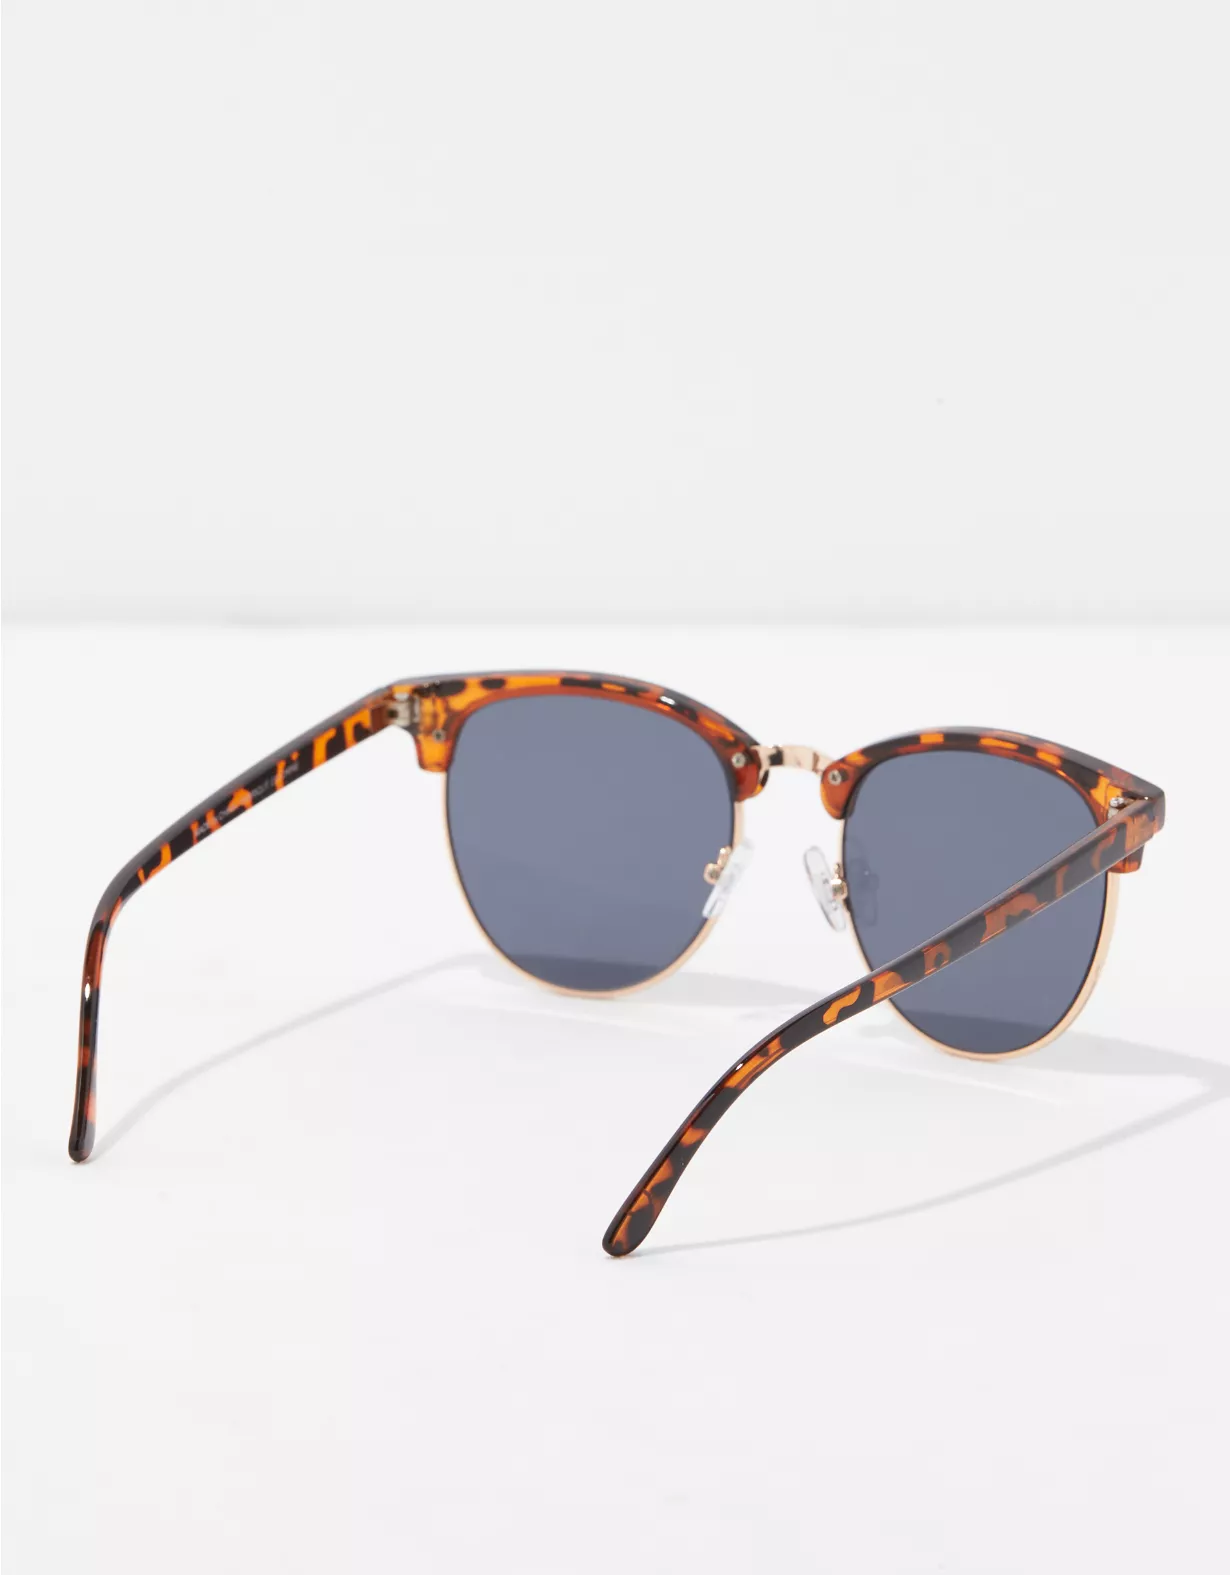 AEO Classic Tortoise Clubmaster Sunglasses